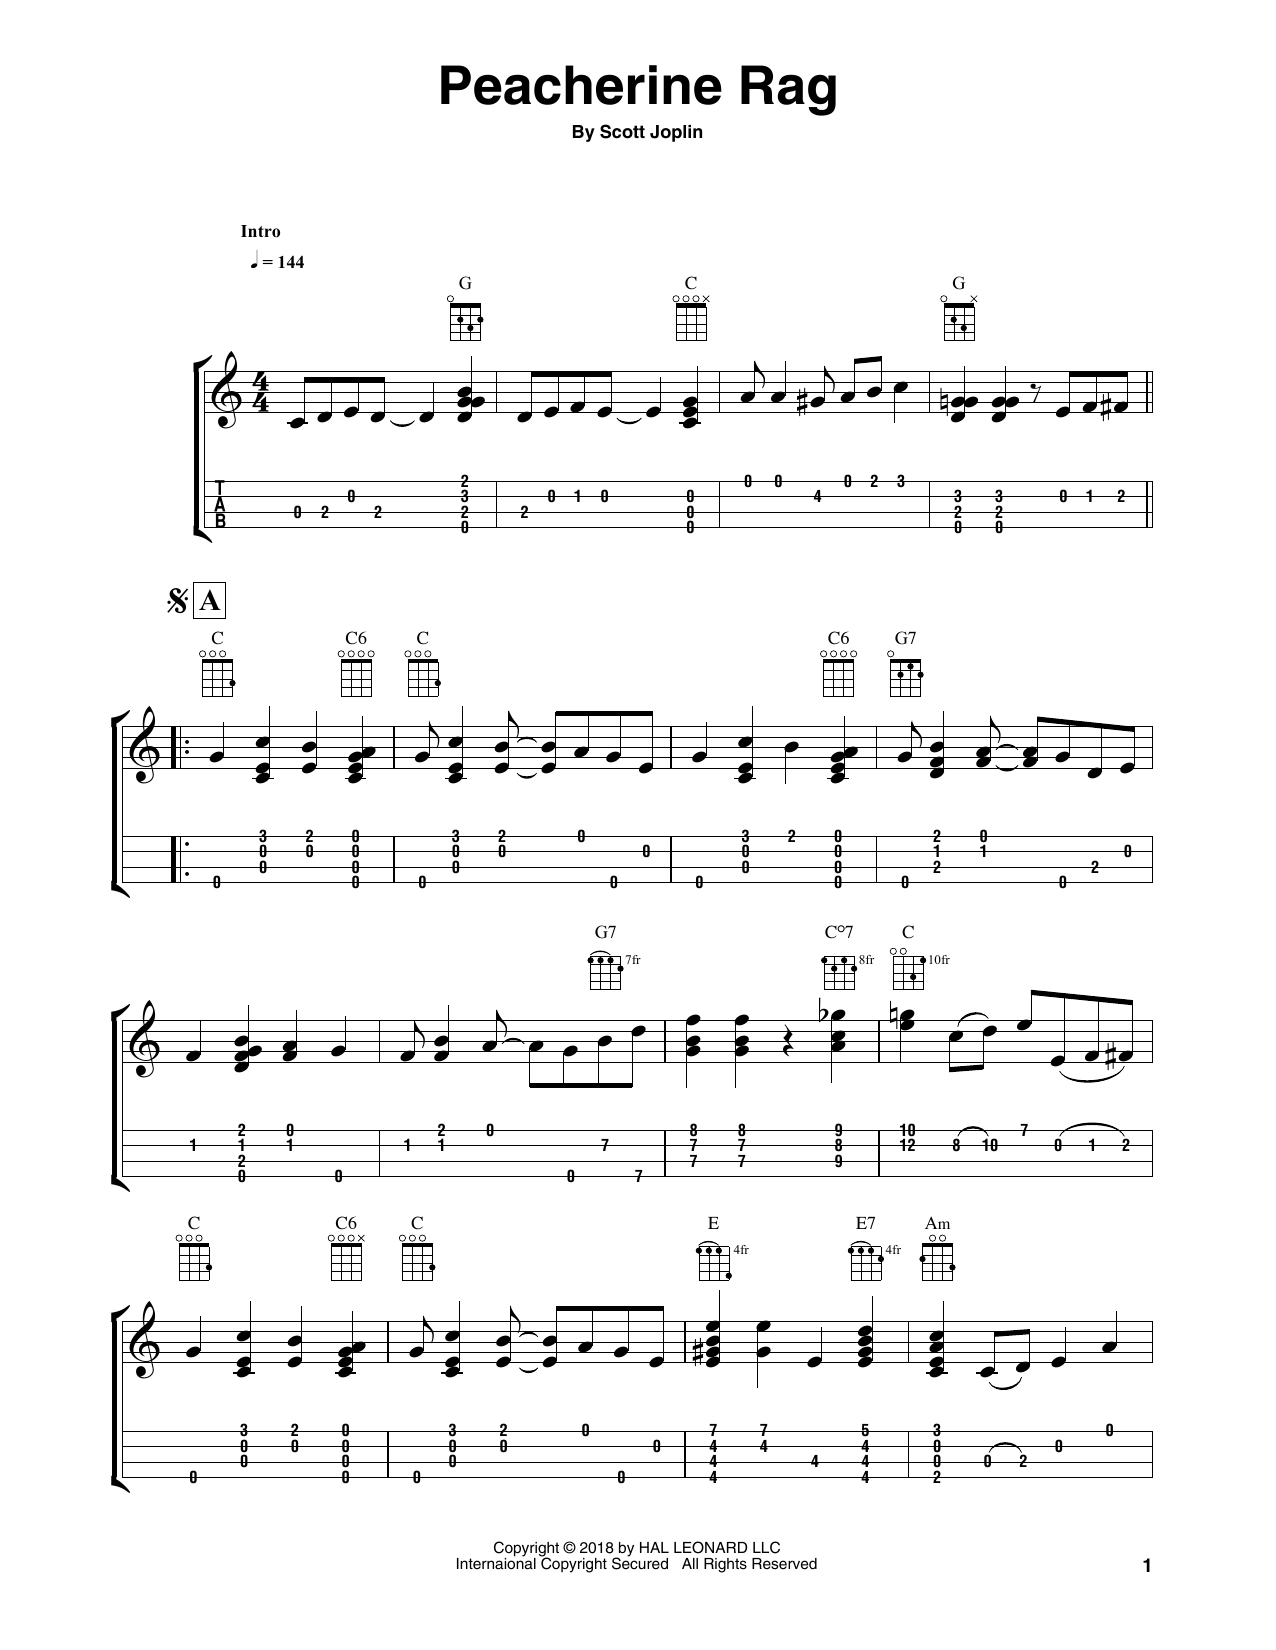 Fred Sokolow Peacherine Rag Sheet Music Notes & Chords for Ukulele - Download or Print PDF